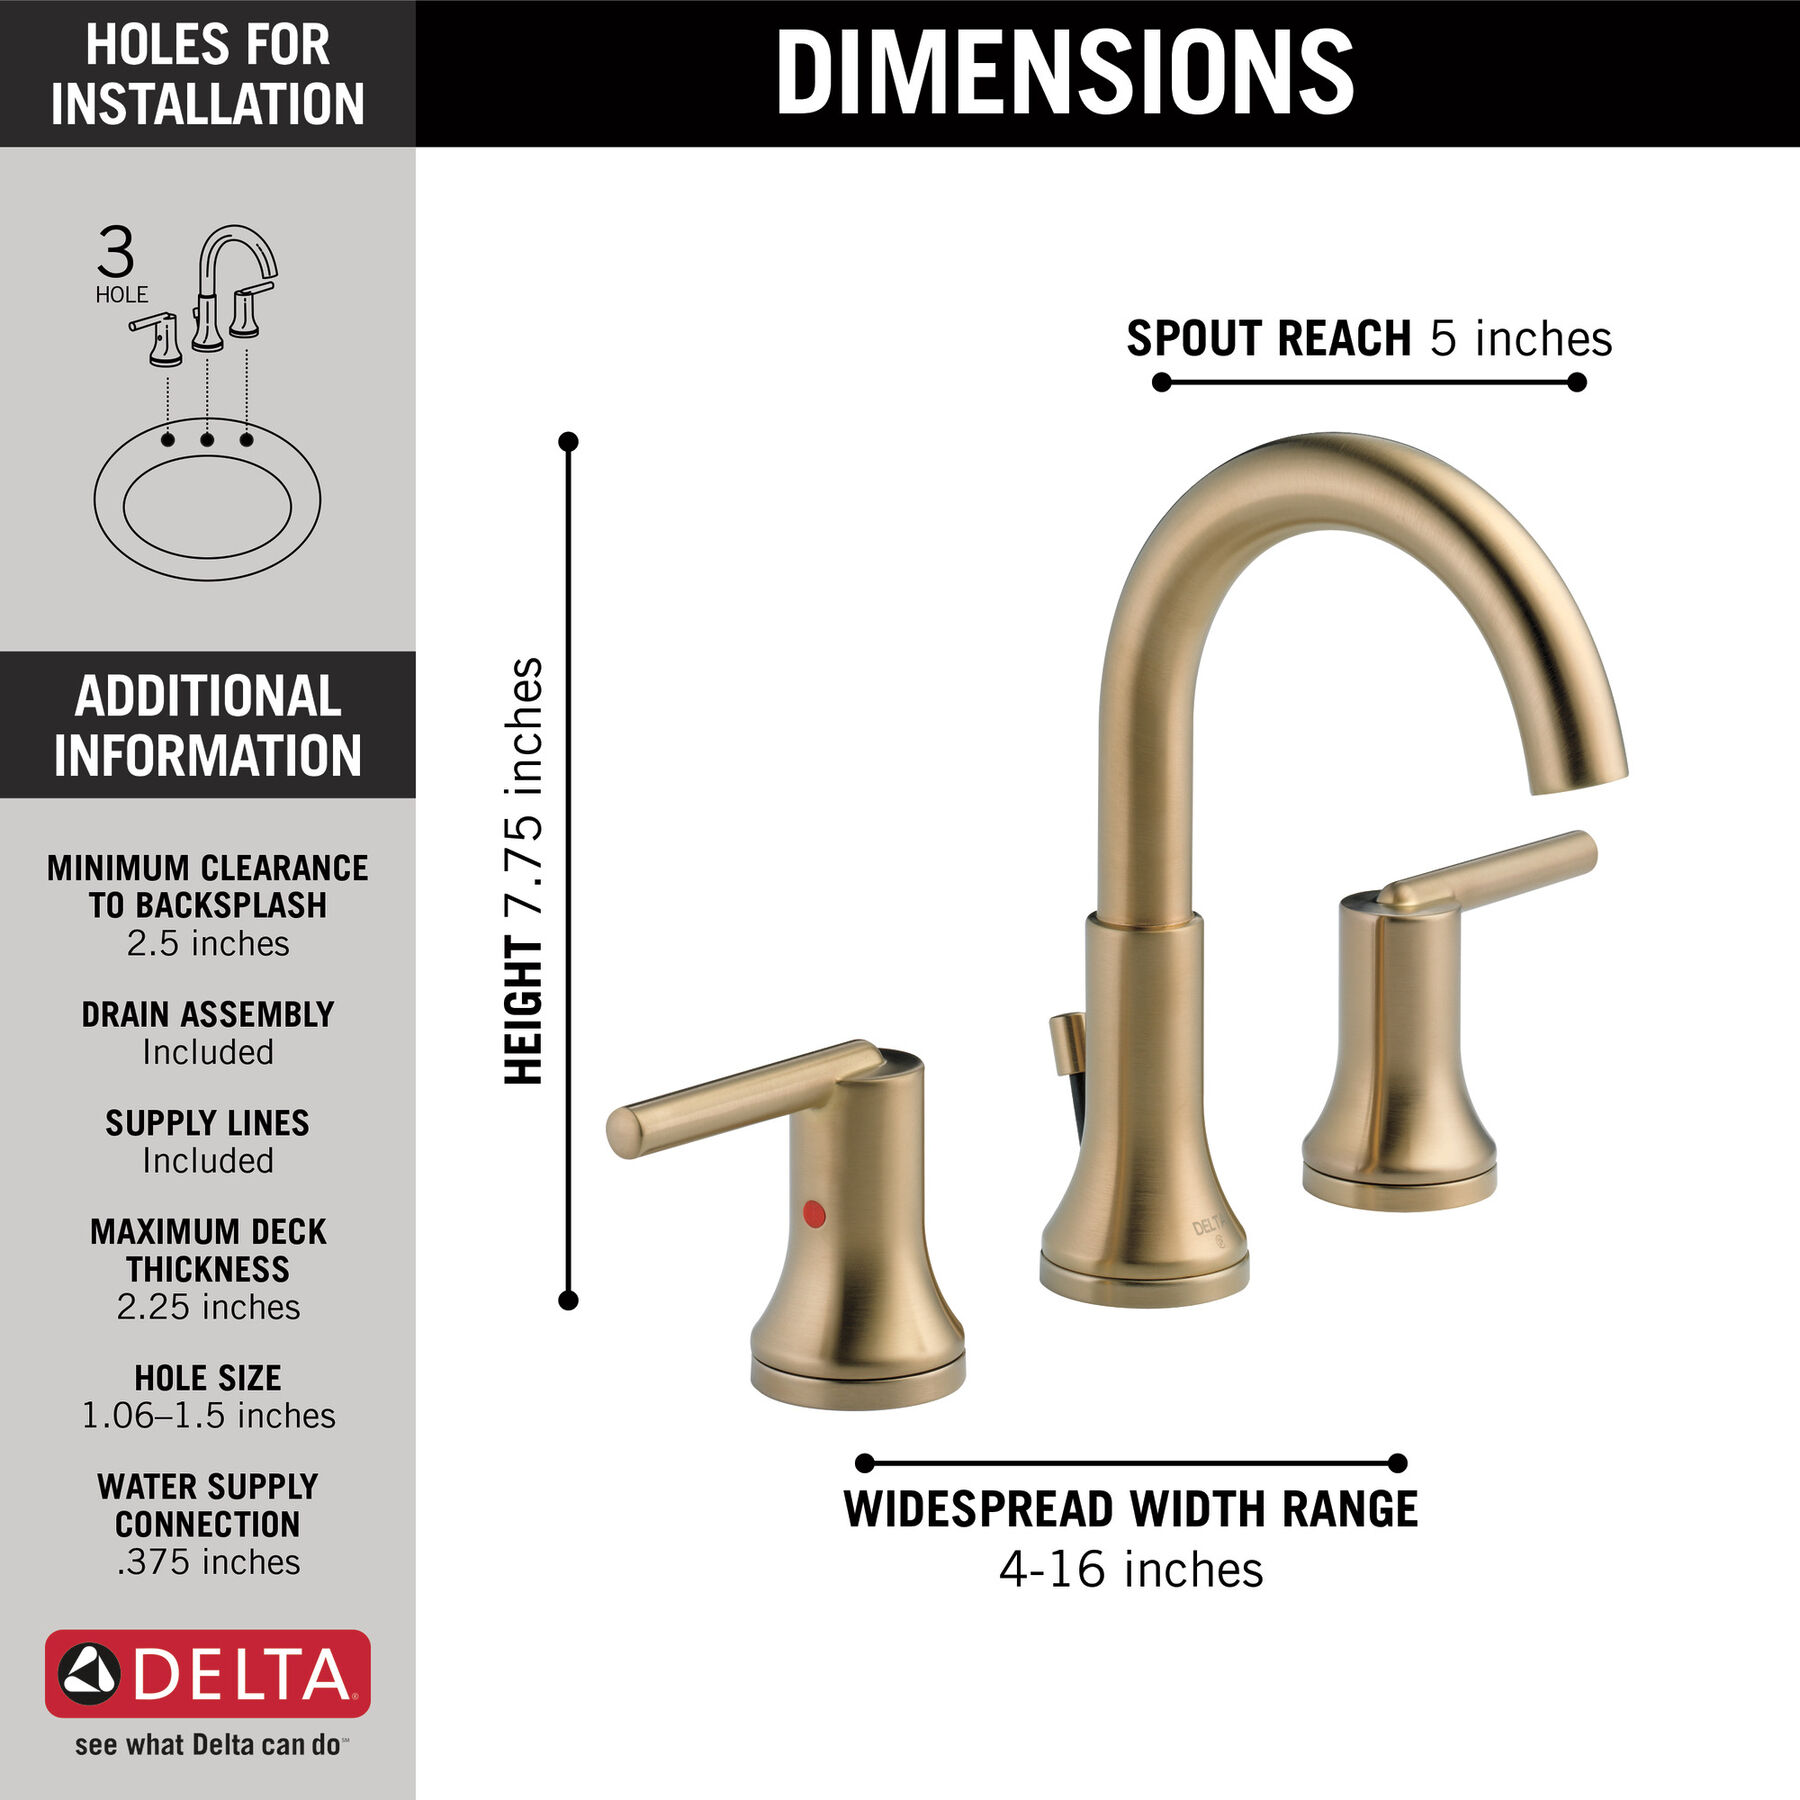 Delta 4-Piece Trinsic Champagne Bronze Decorative Bathroom